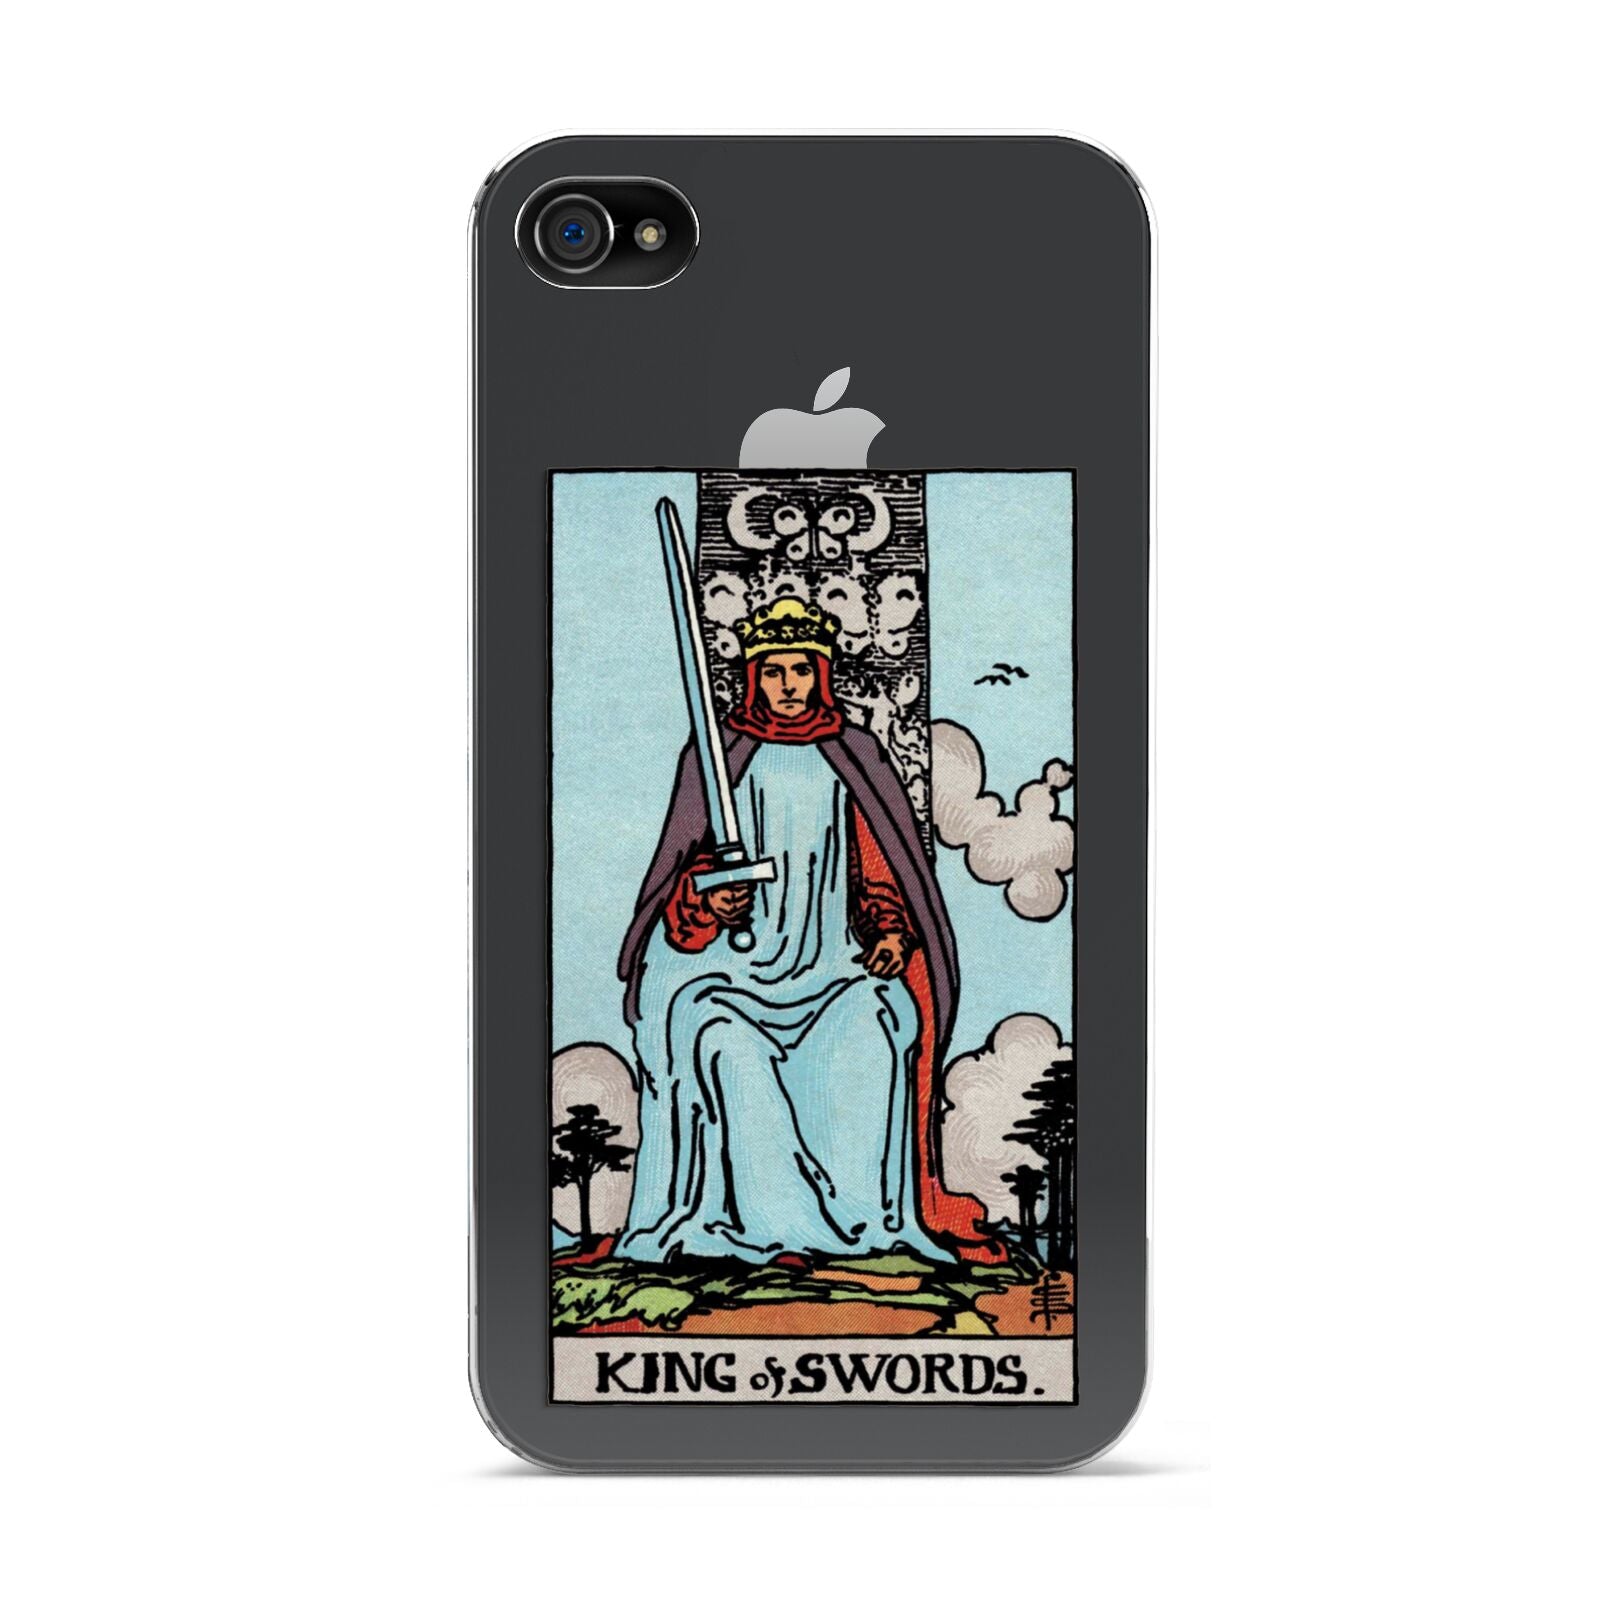 King of Swords Tarot Card Apple iPhone 4s Case